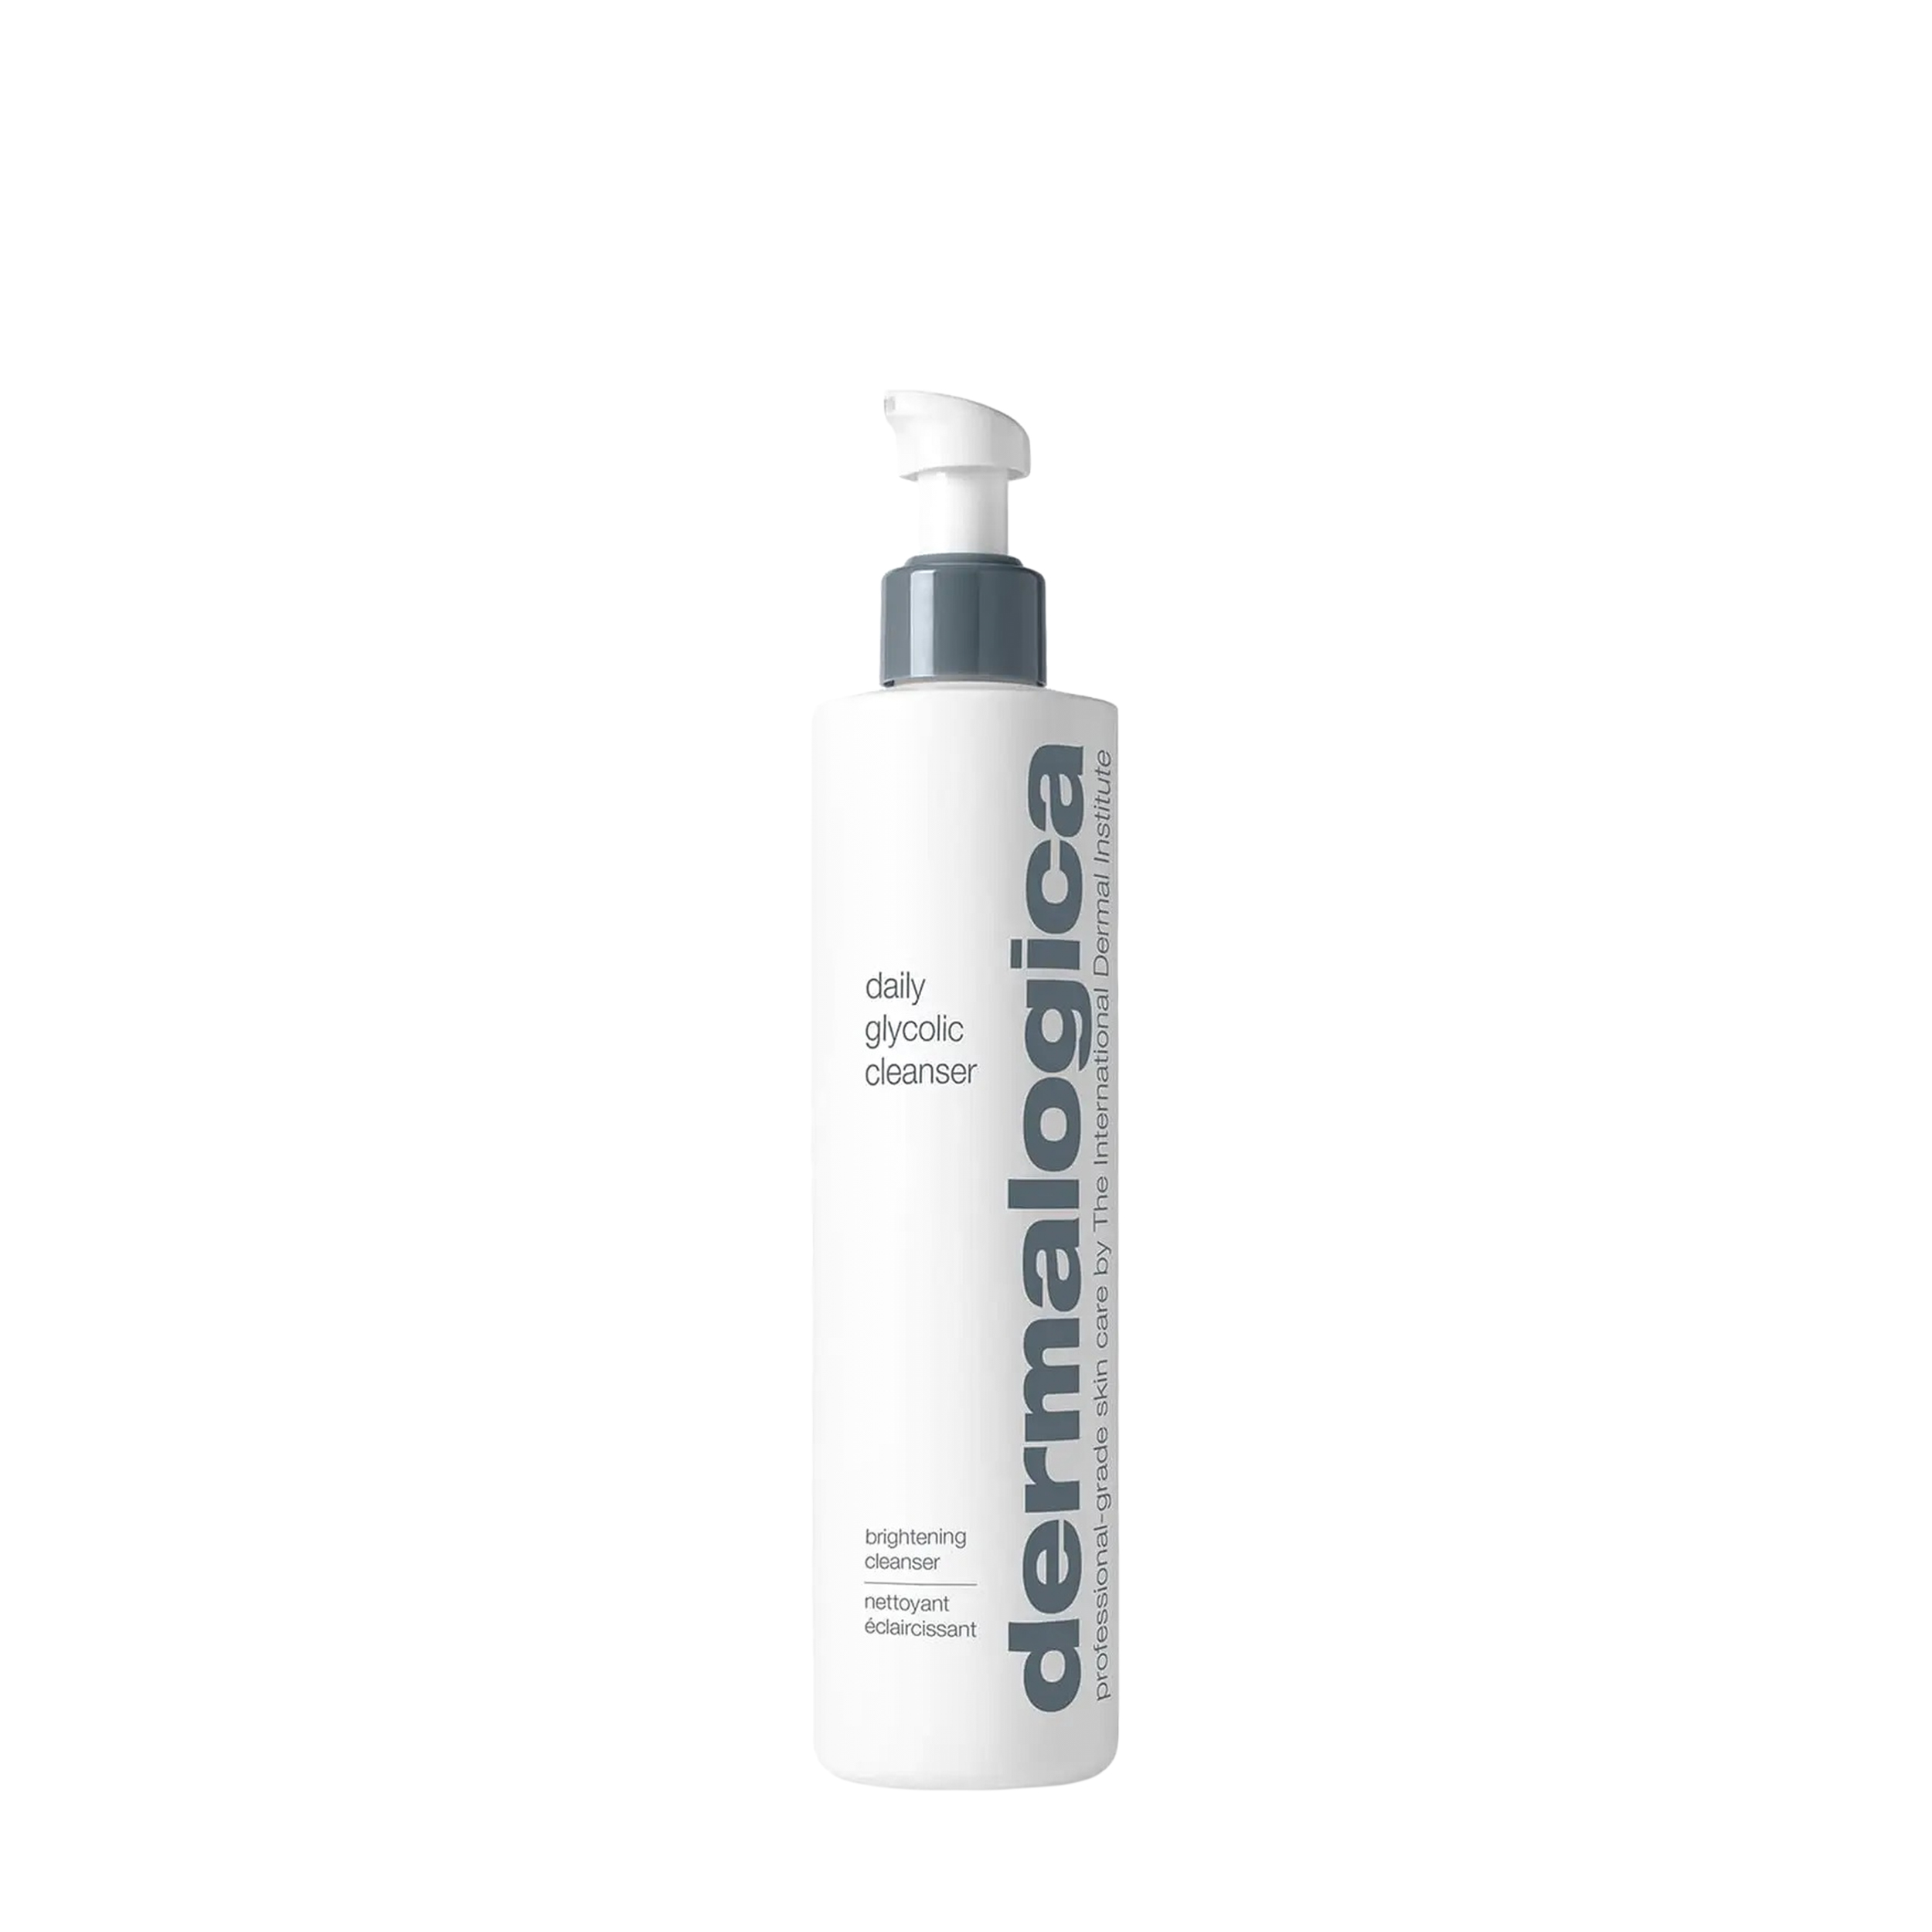 Dermalogica Dermalogica Очищающий гель для лица с гликолевой кислотой Daily Glycolic Cleanser 295 мл от Foambox